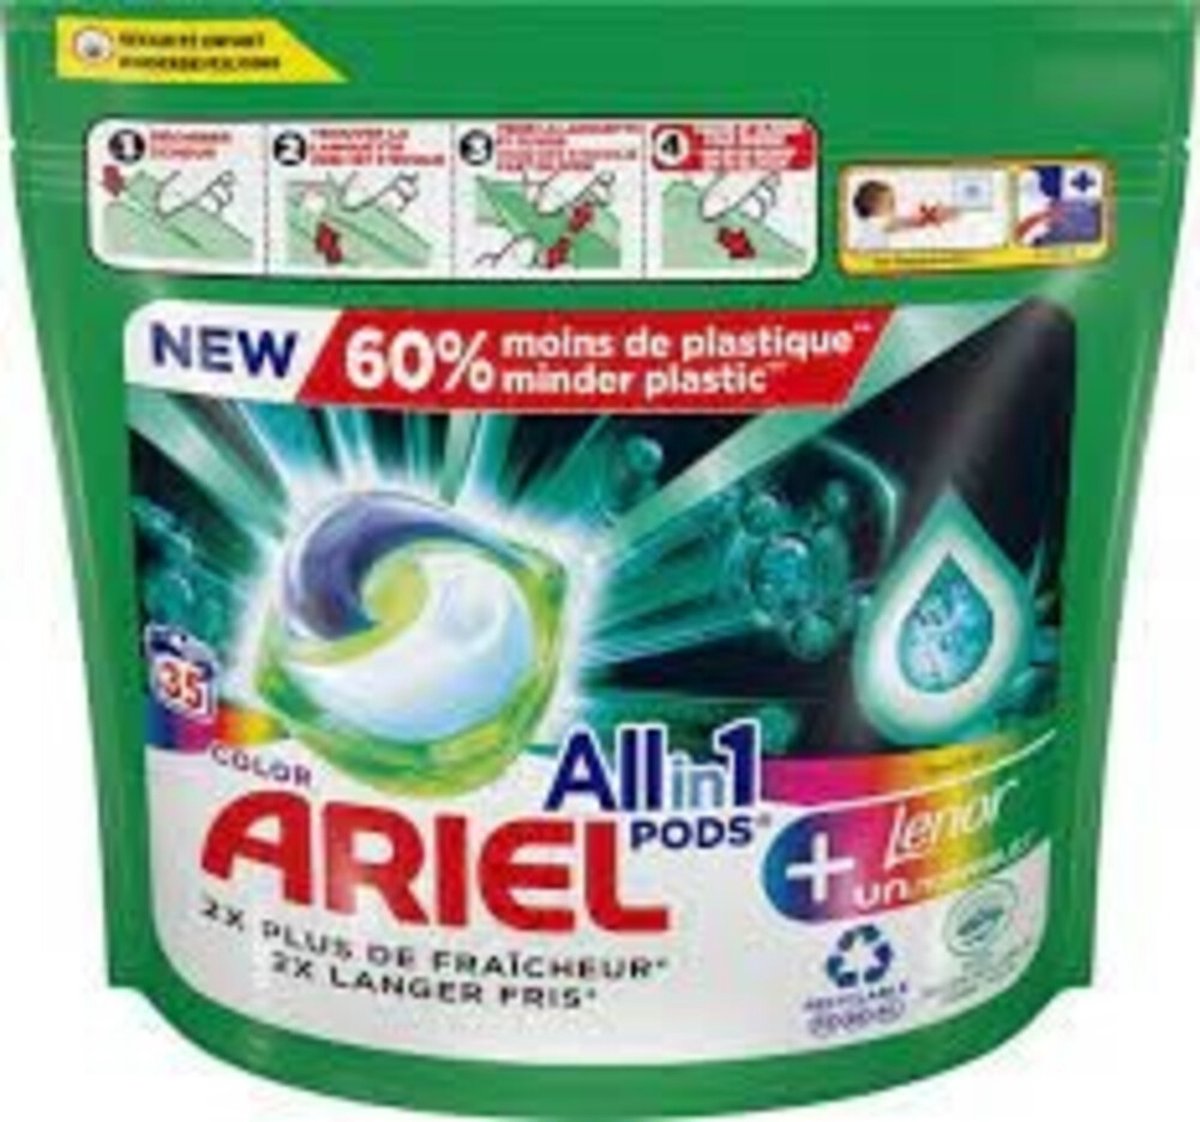 Ariel Pods 3 in 1 Original - Lessive 27 pastilles Pas Cher